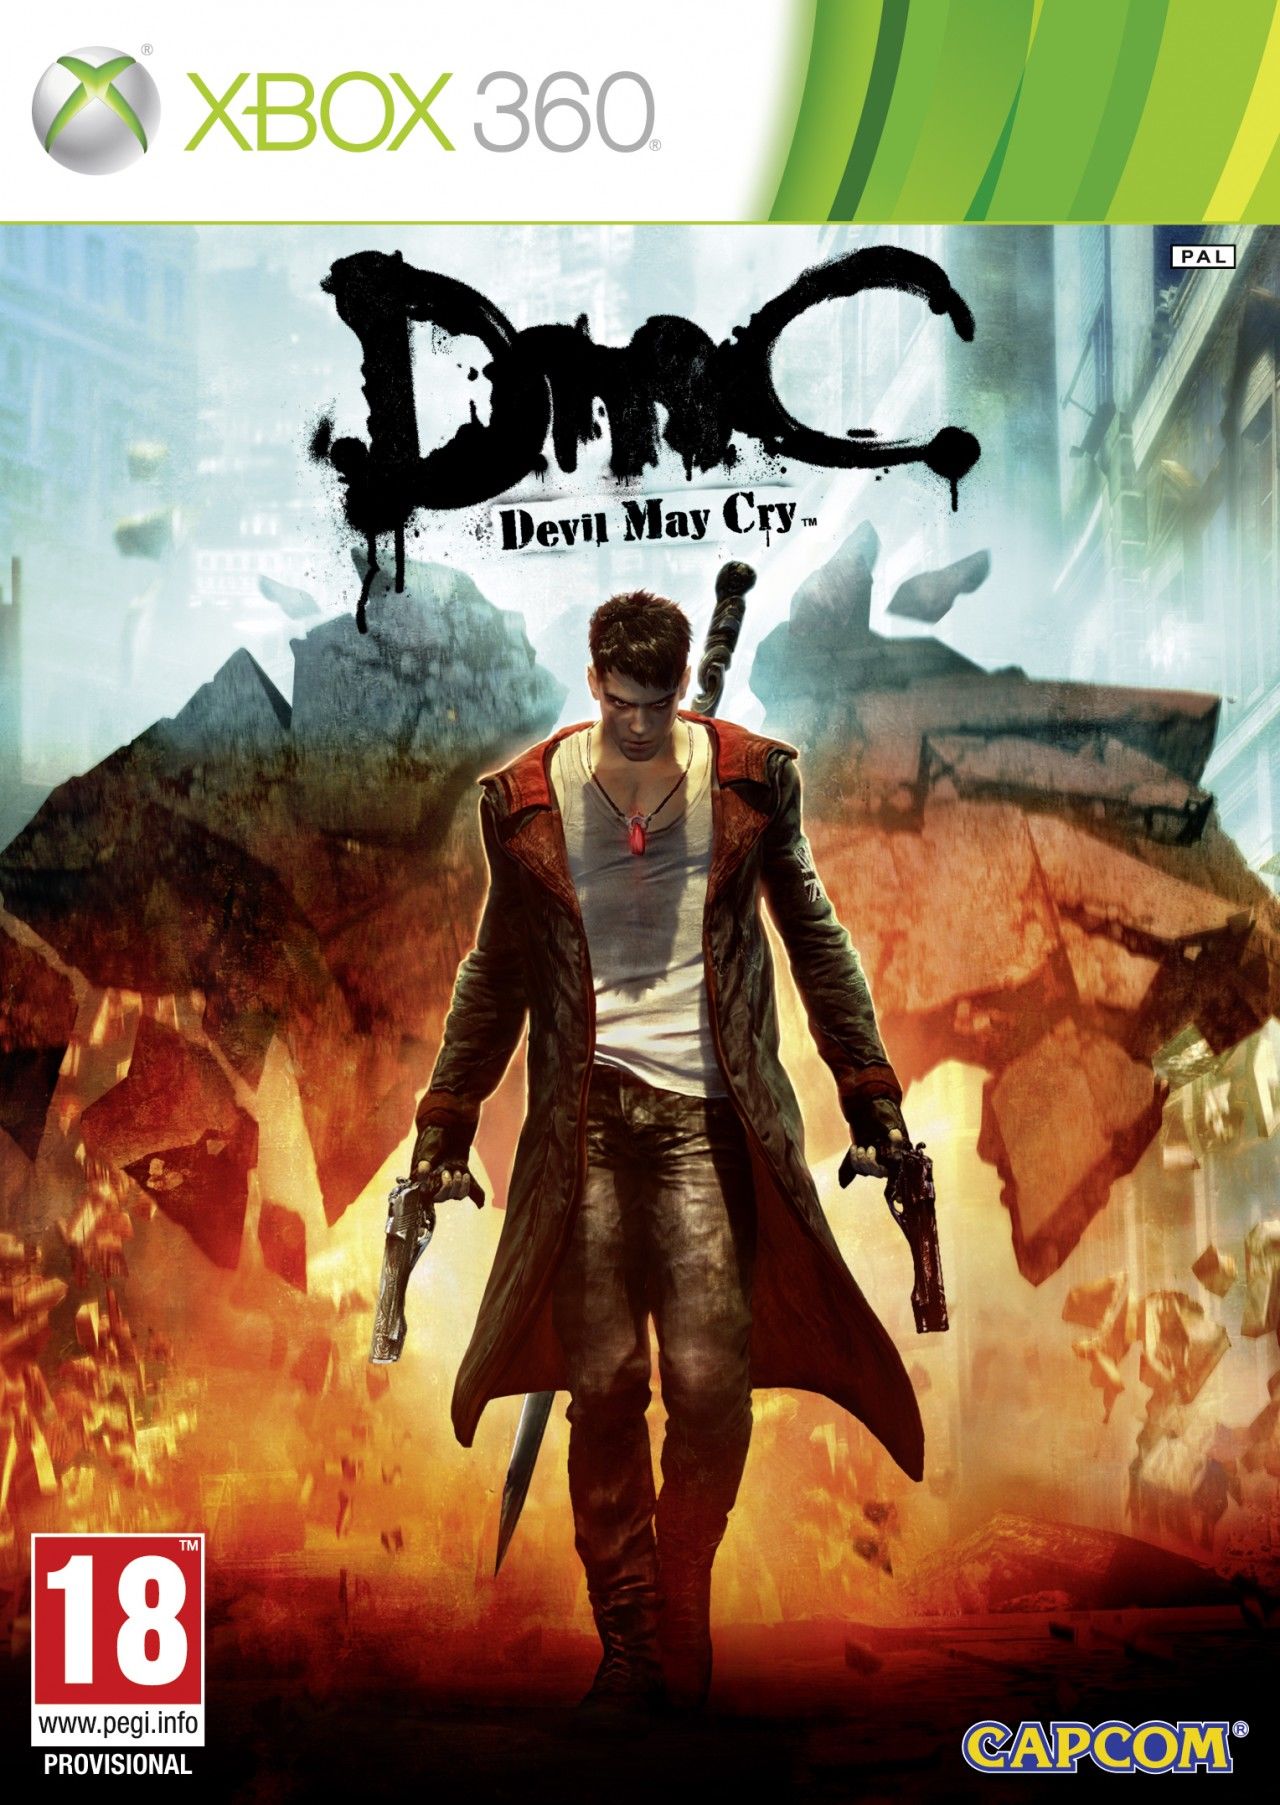 DmC (Devil may Cry)